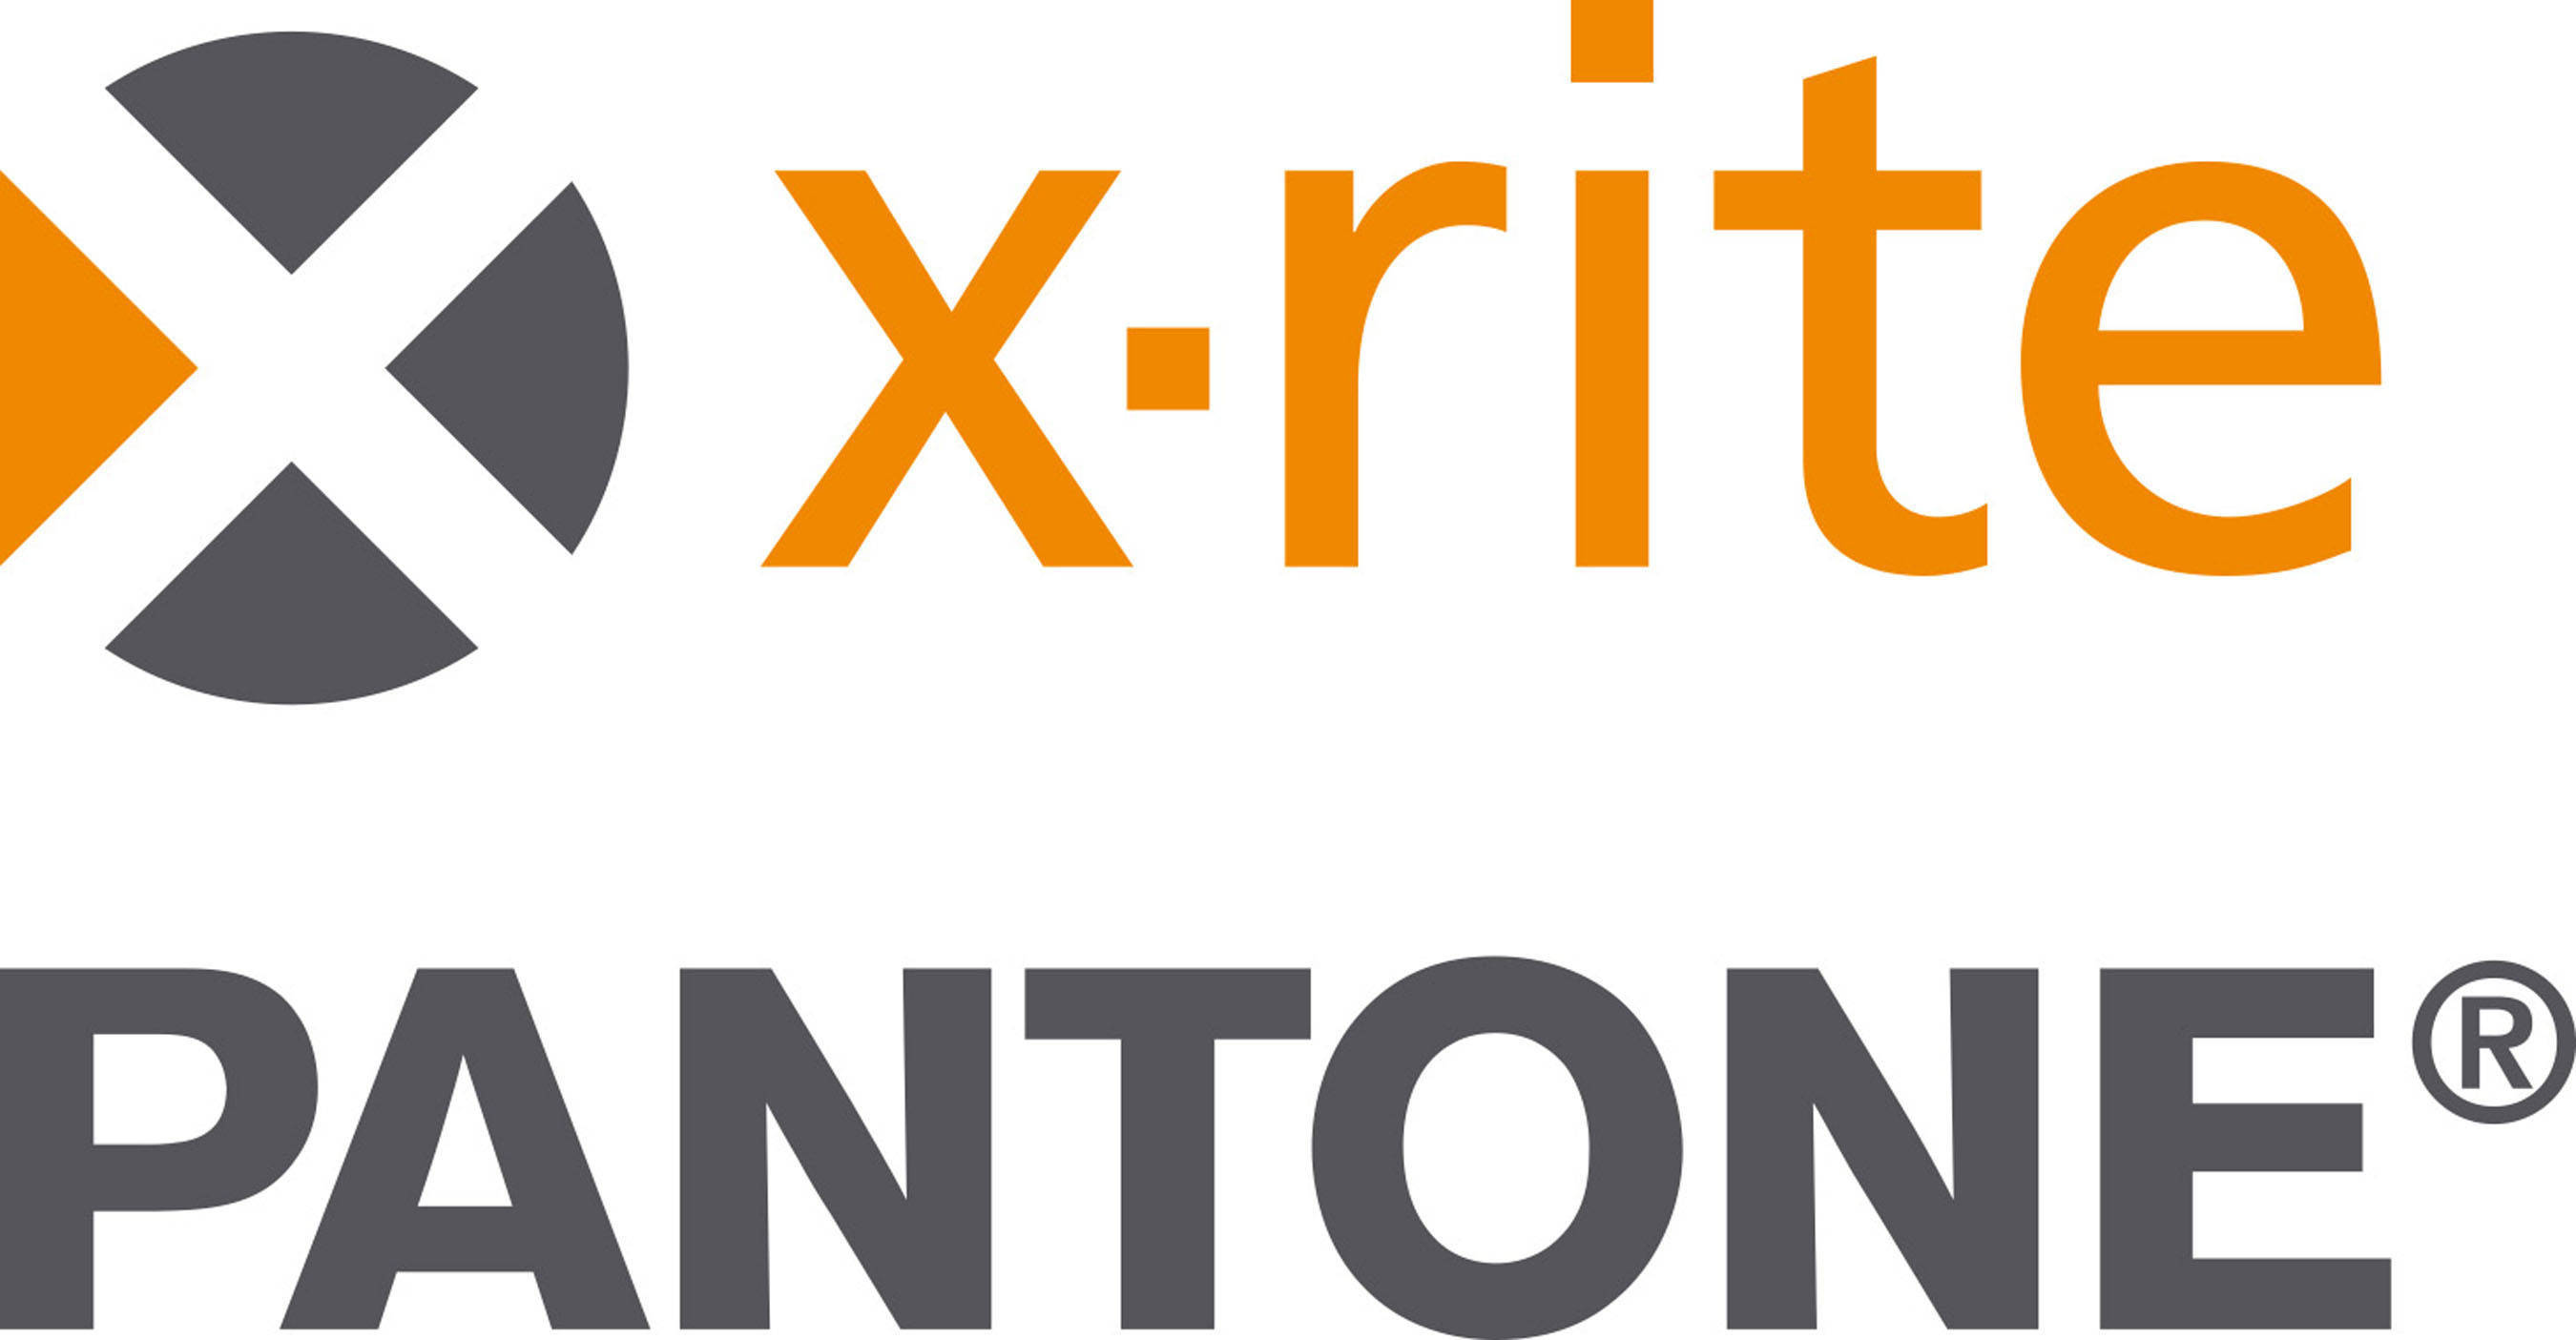 Pantone, an X-Rite company.